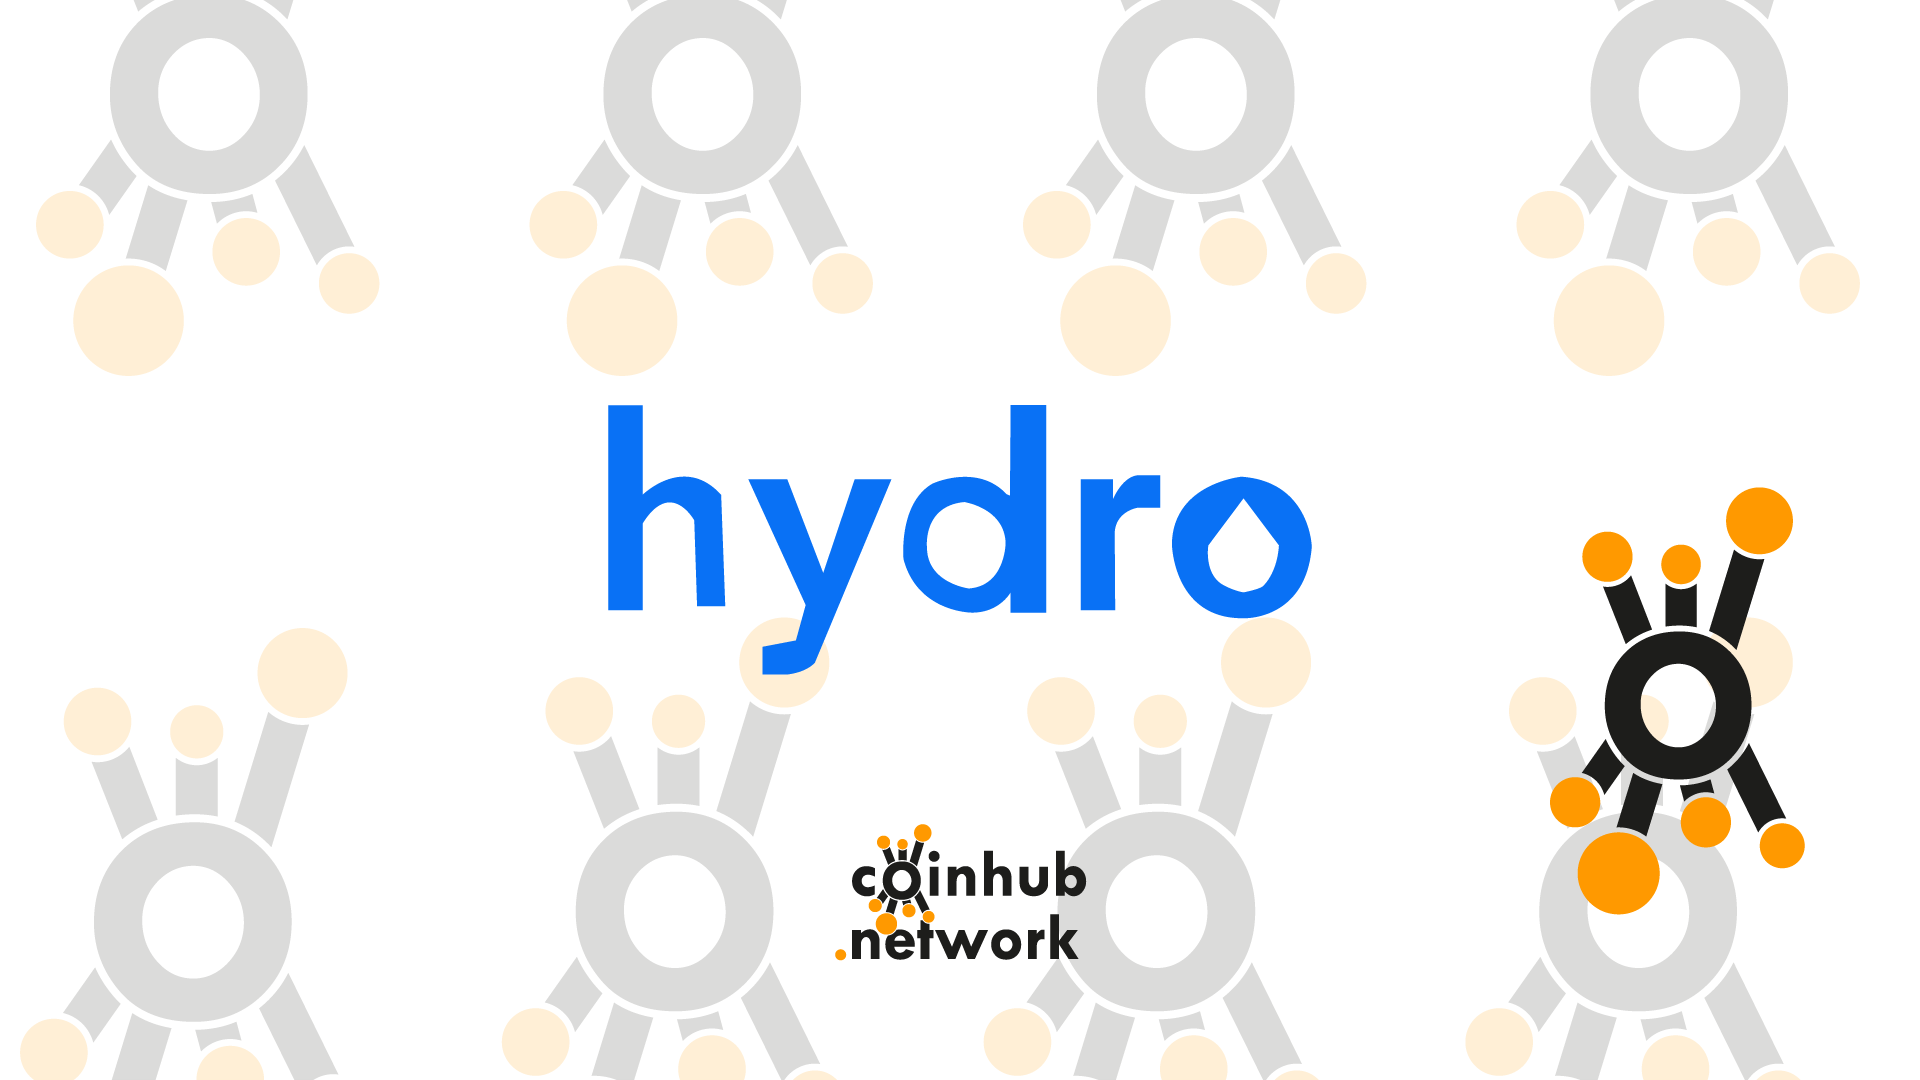 coinhub.network-hydro-raindrop.png